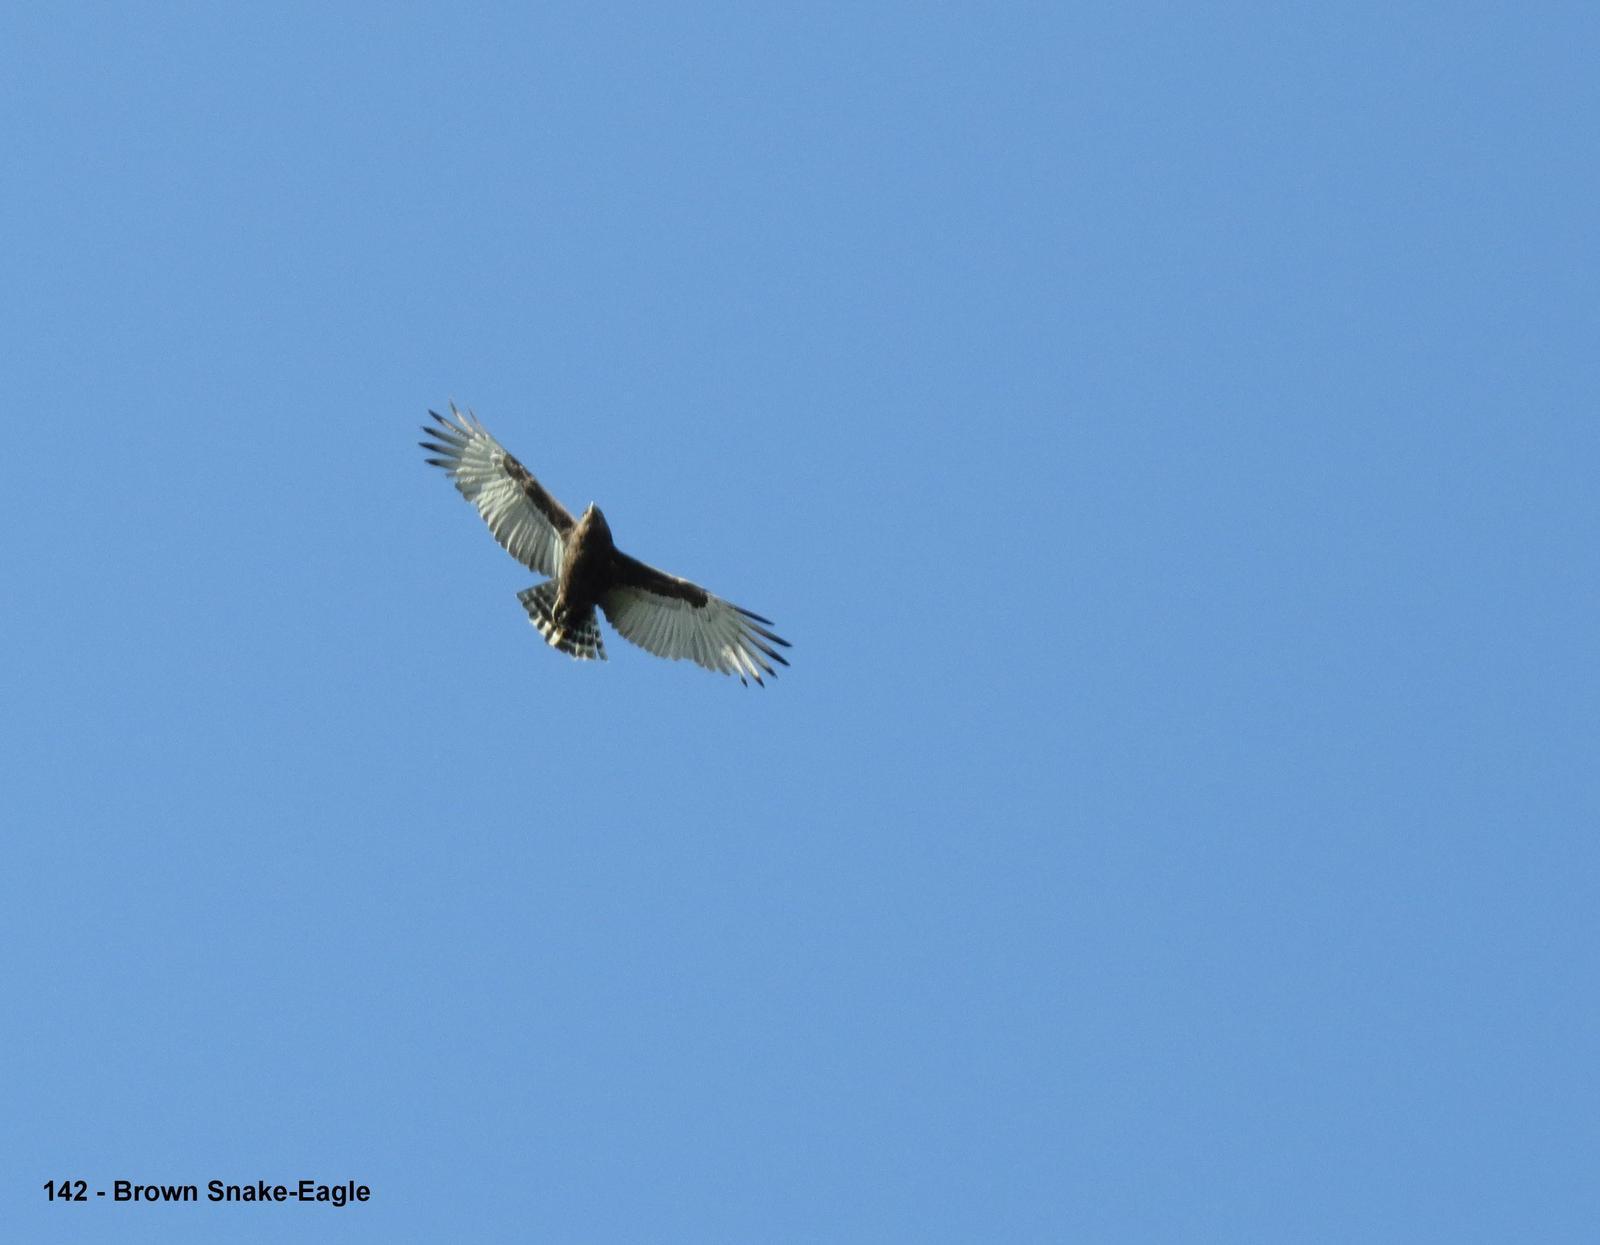 Brown Snake-Eagle Photo by Richard  Lowe